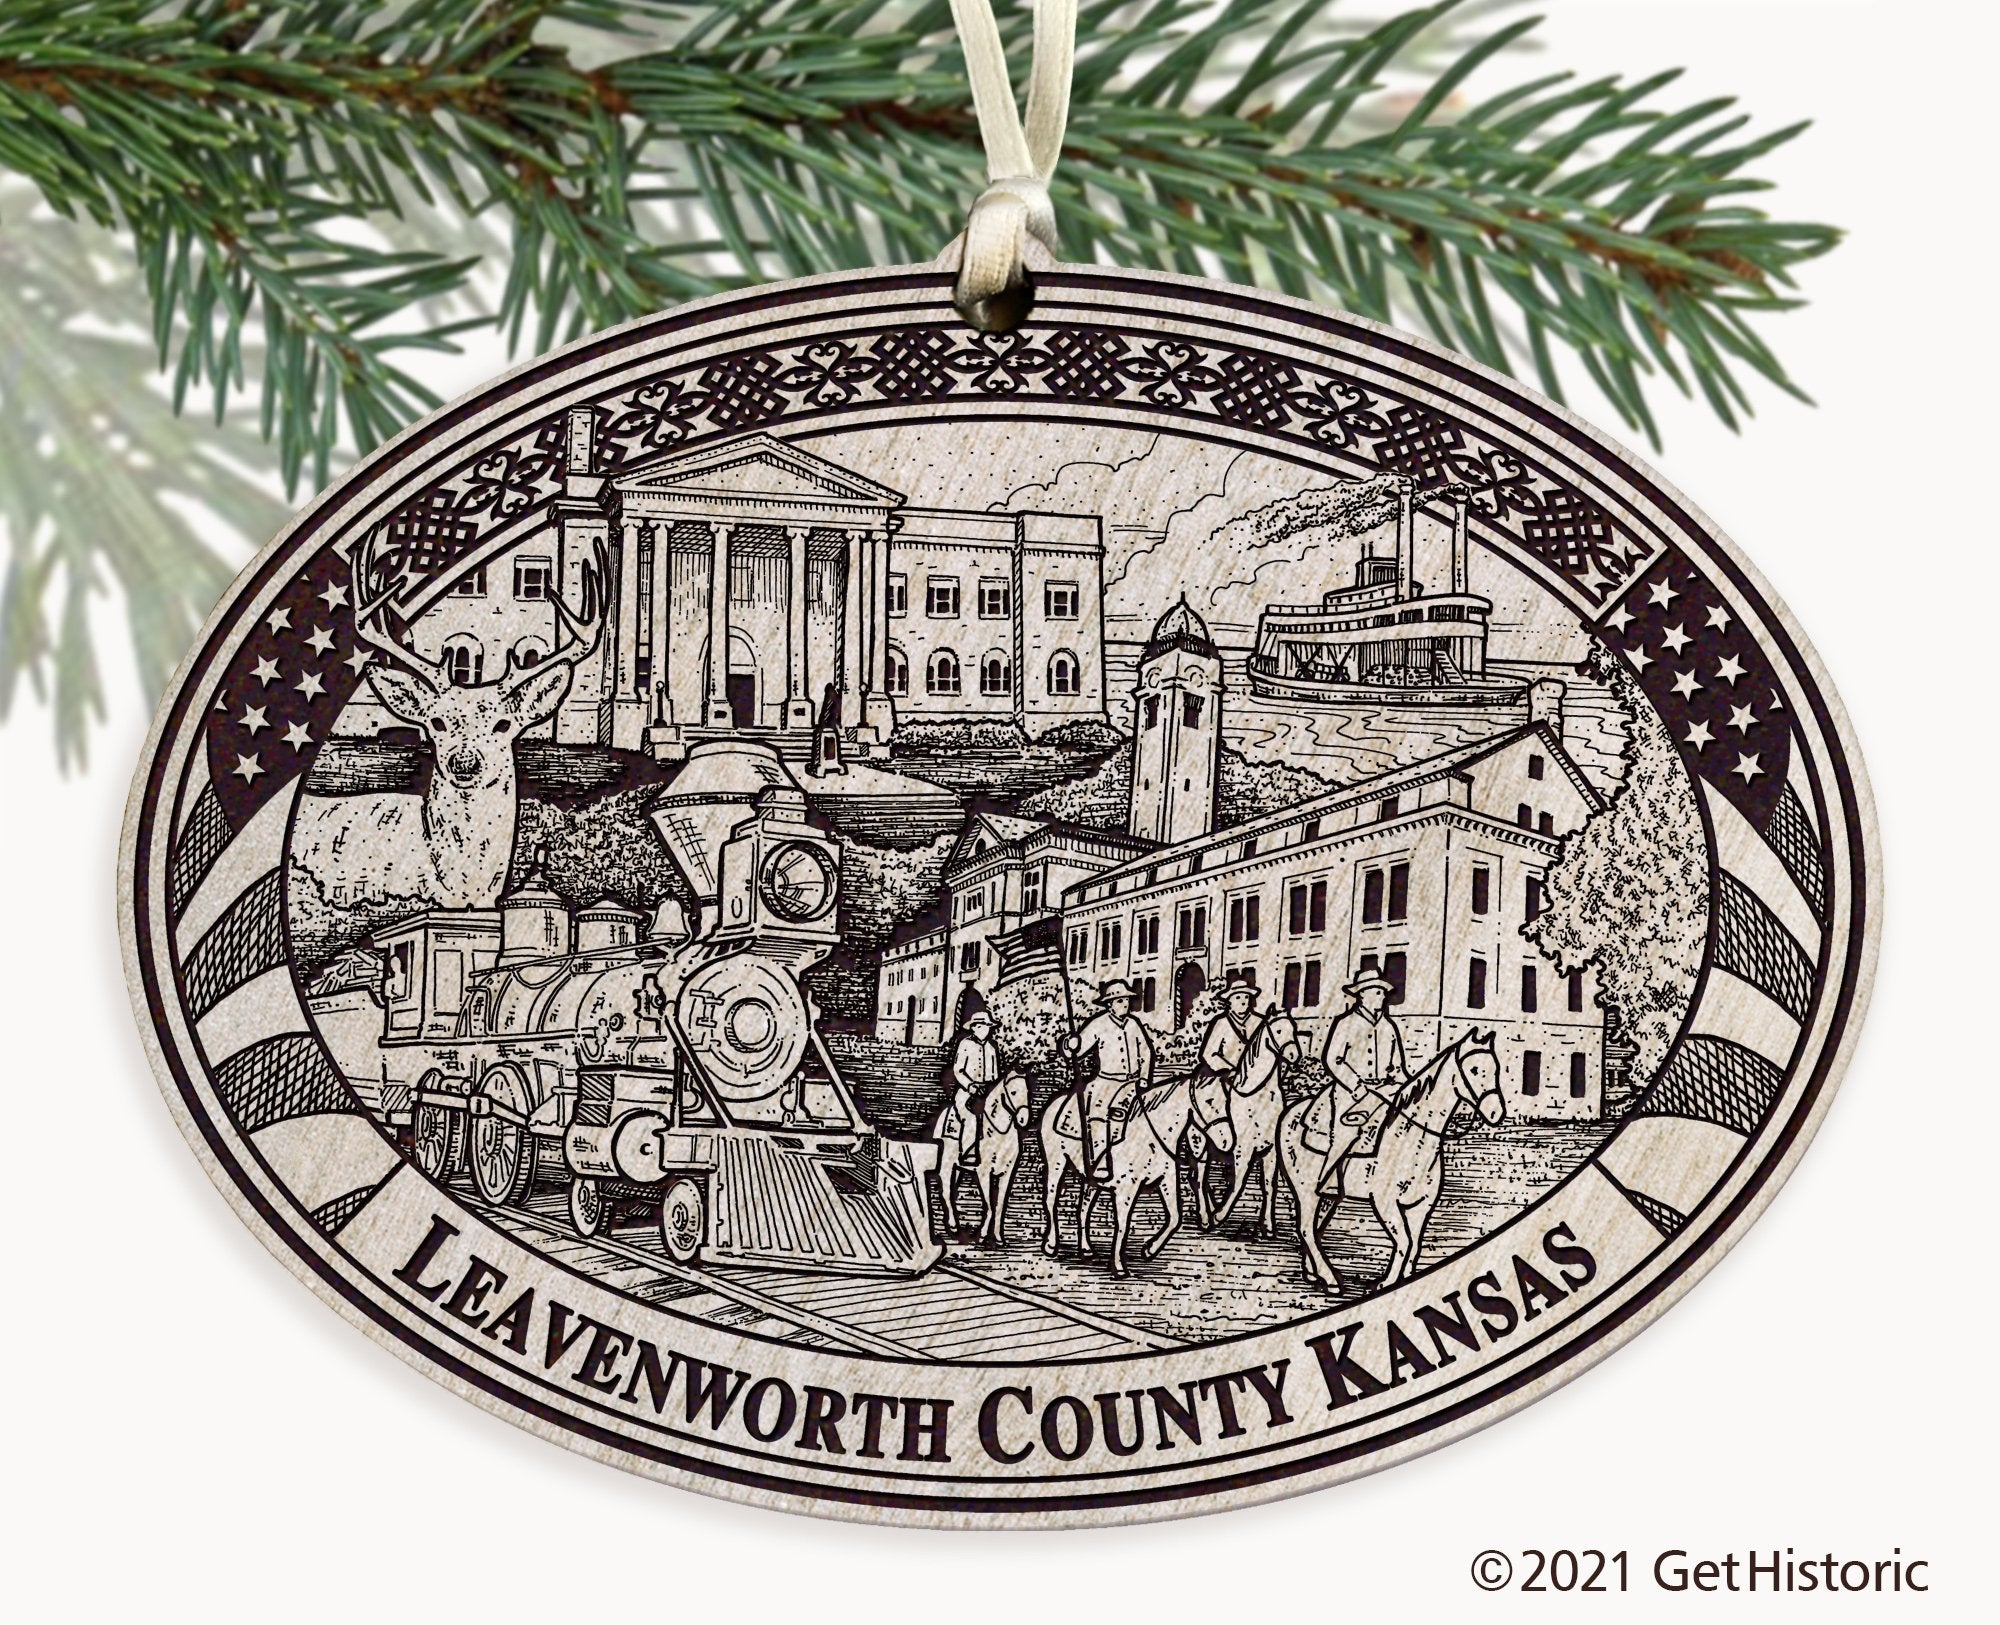 Leavenworth County Kansas Engraved Ornament